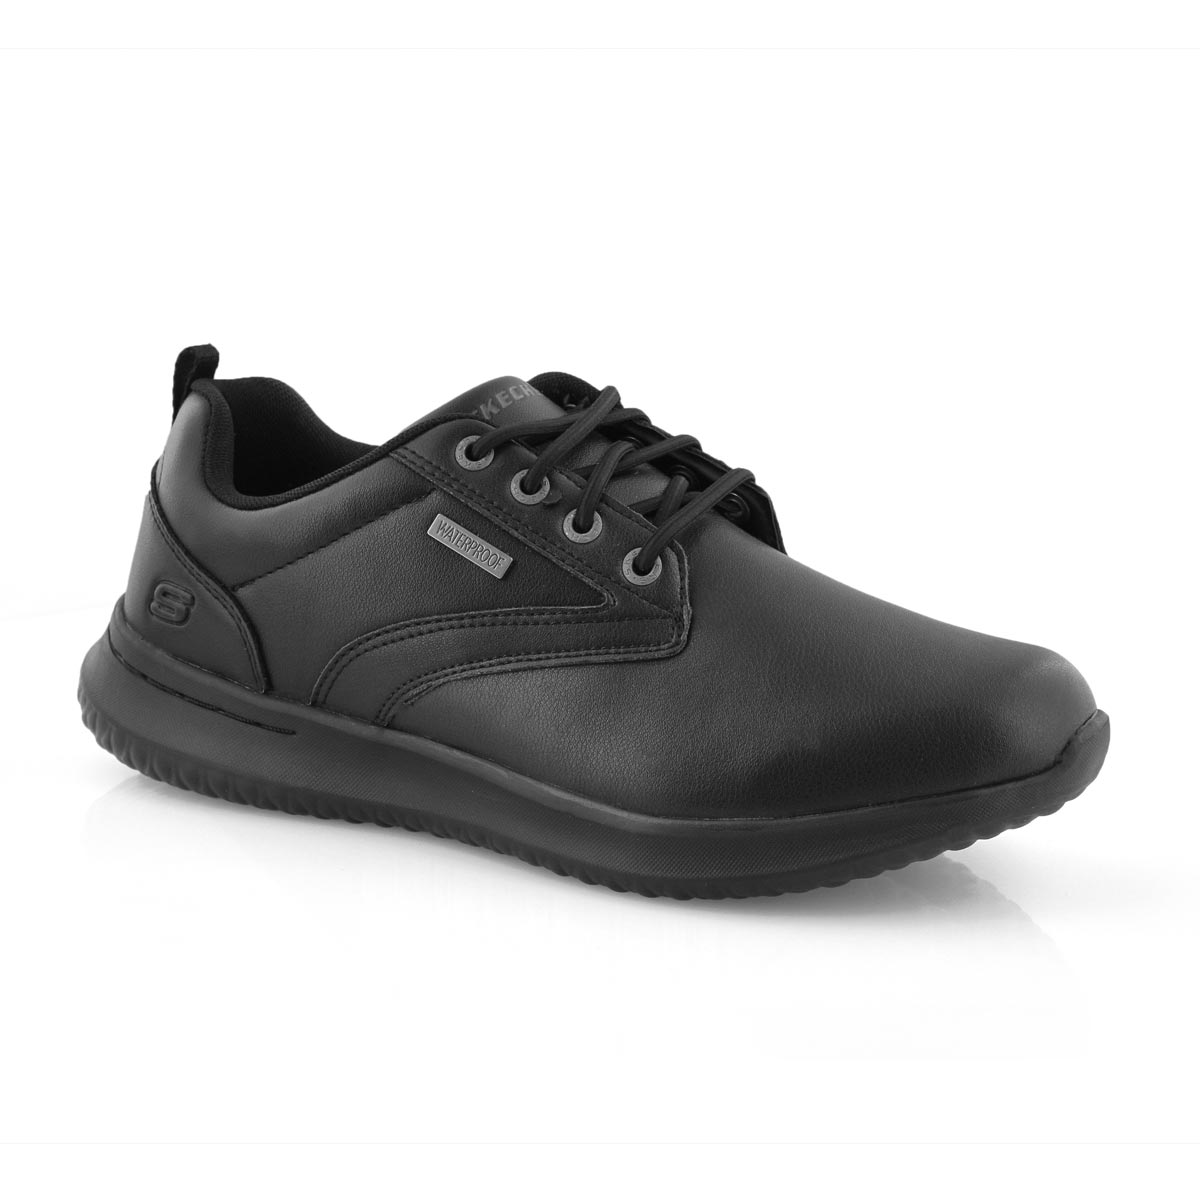 Skechers Men's ANTIGO black waterproof sneake | SoftMoc.com